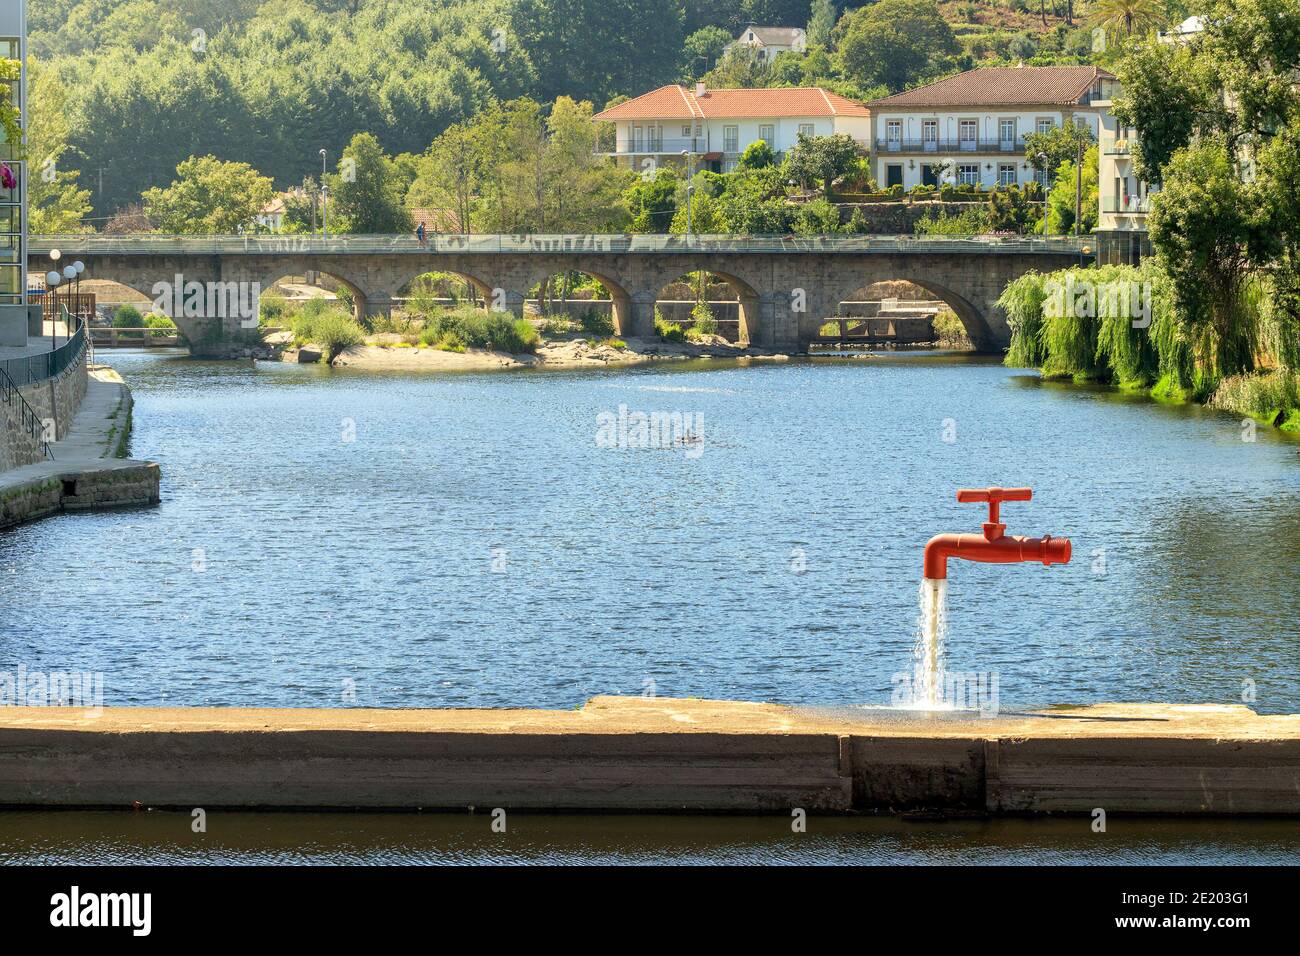 Termas de São Pedro do Sul, Portugal - August 5, 2020: Landscape of the Vouga river in the thermal baths of São Pedro do Sul in Portugal. Stock Photo